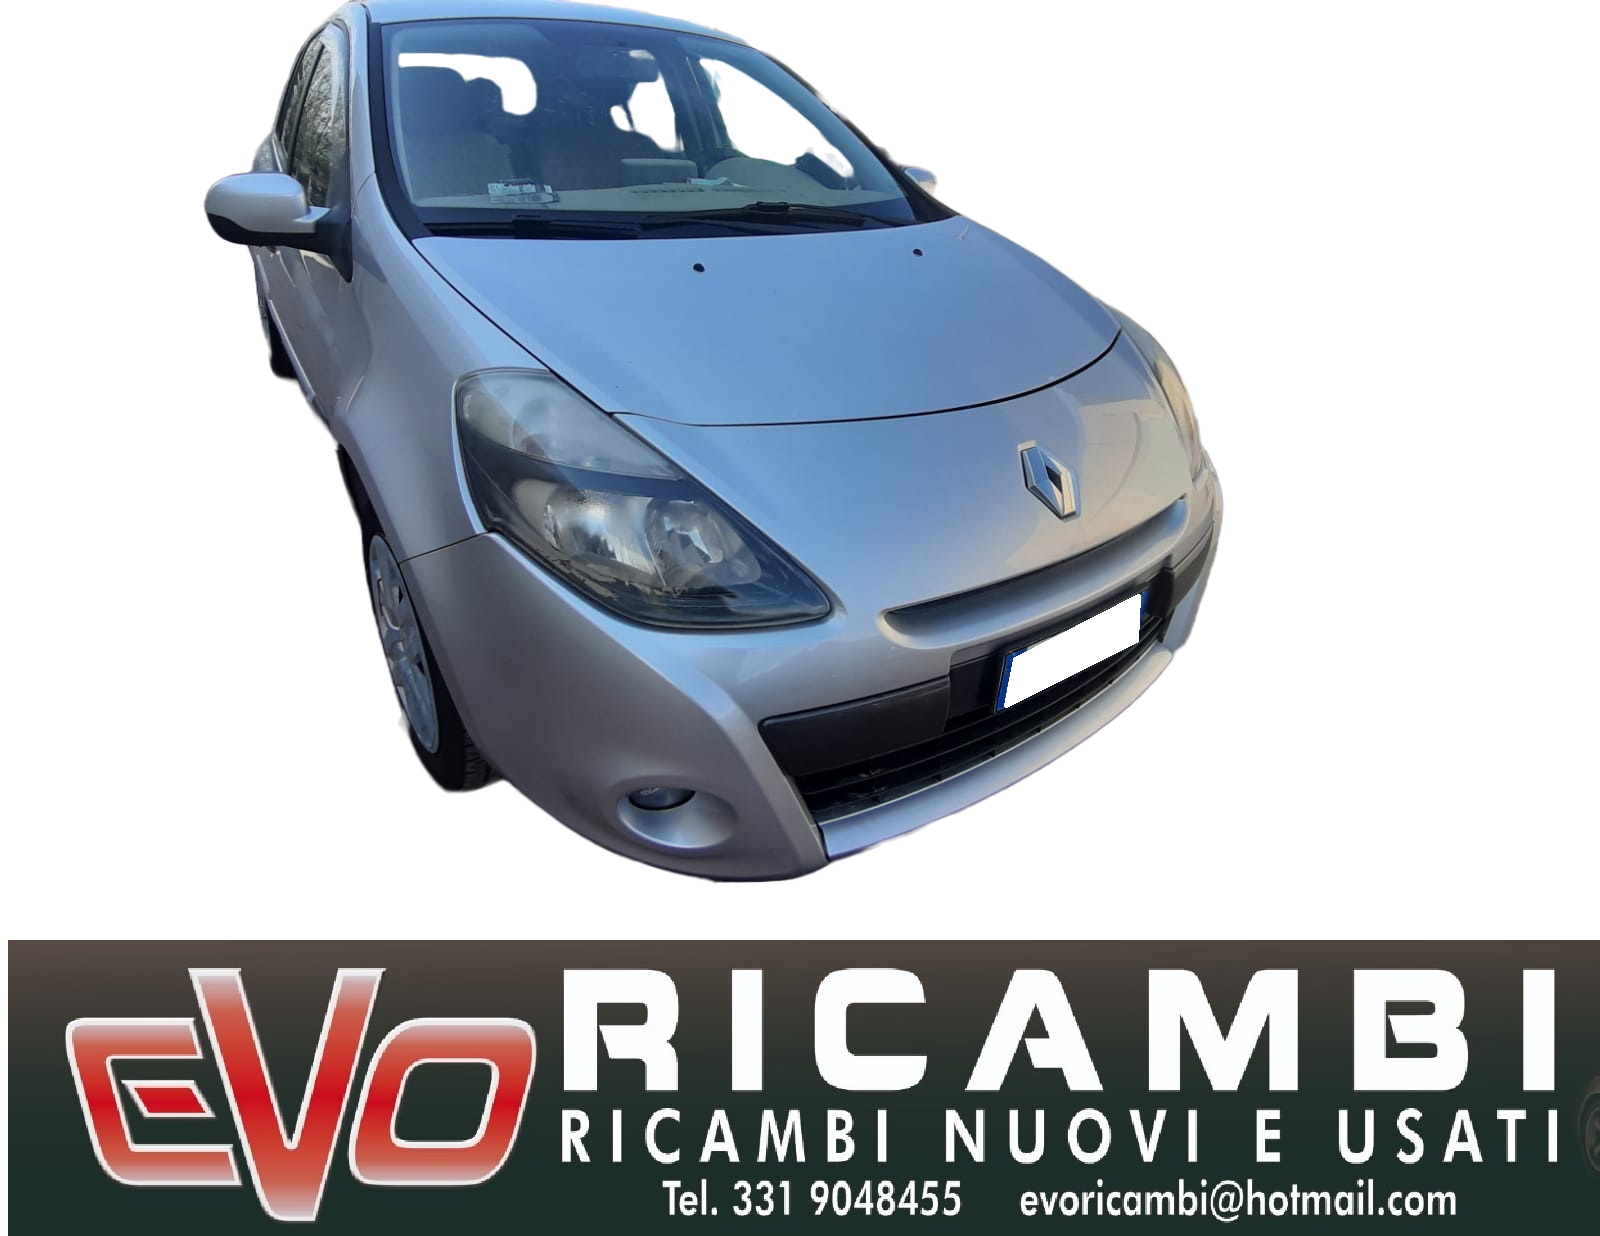 Ricambi per Renault Clio III serie Restyling 1.2 benzina 75cv – Evoricambi